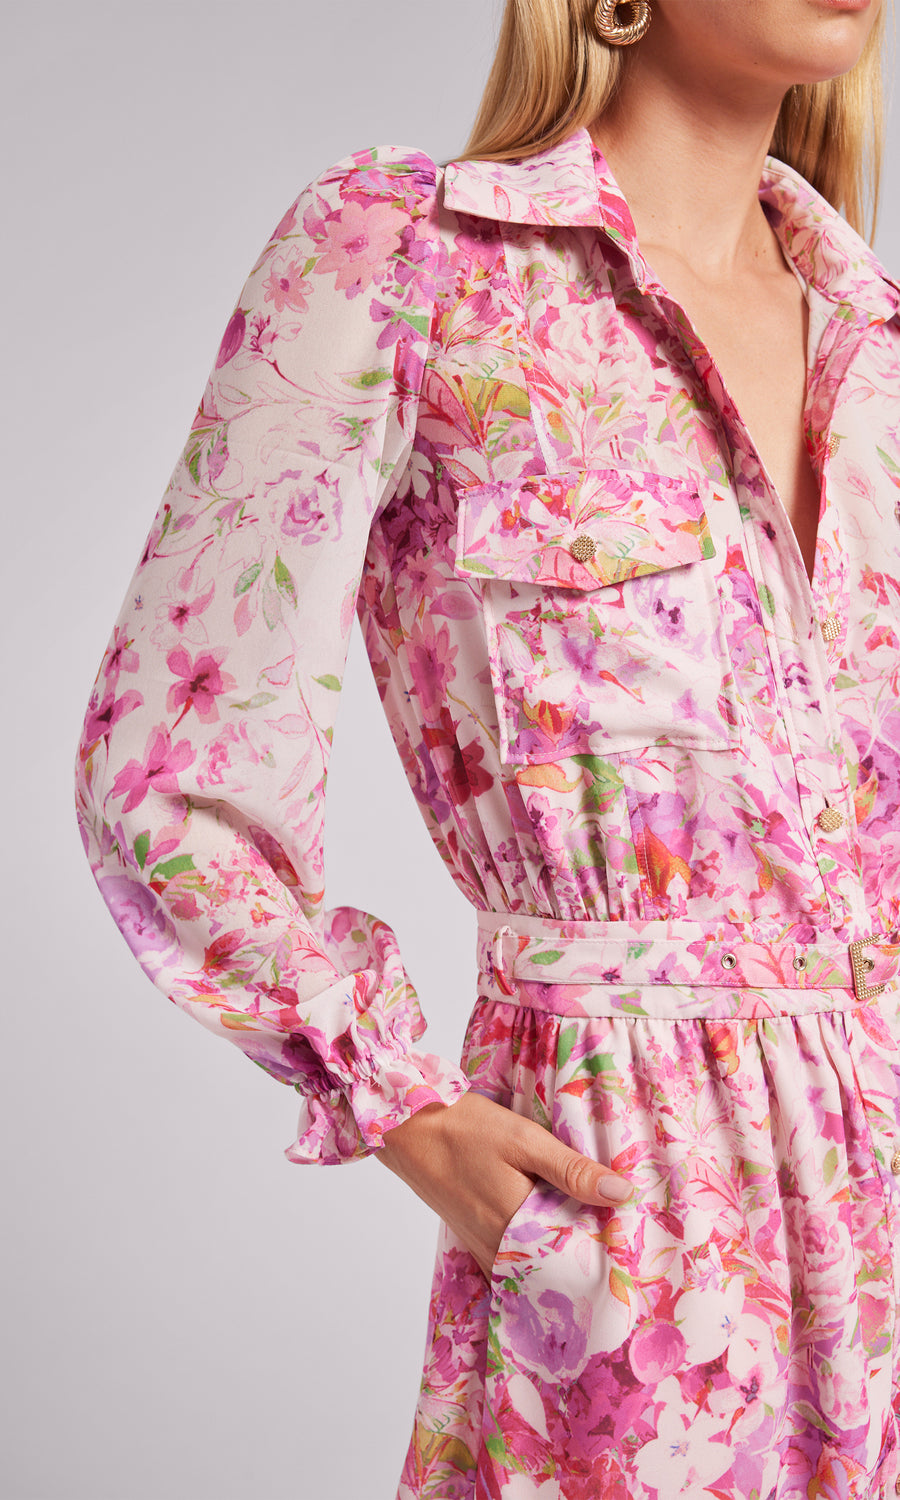 Silvia Floral Dress - Floral Pink 